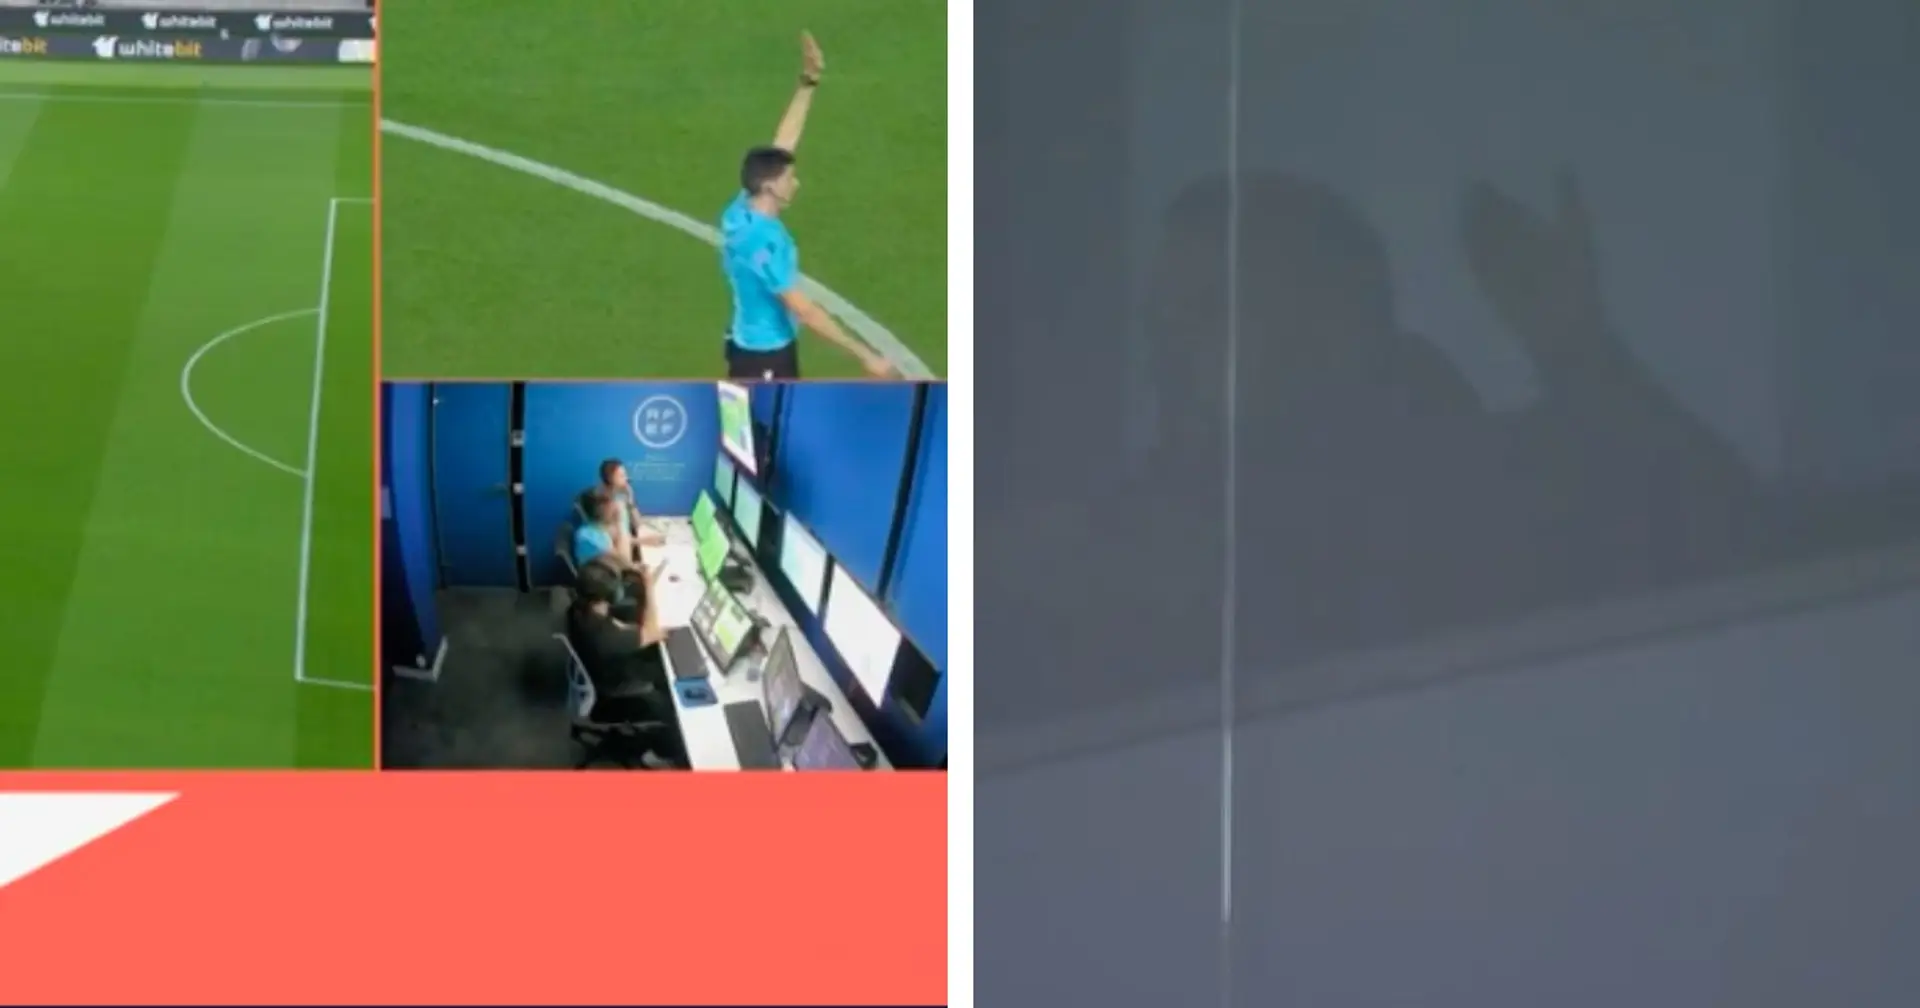 Deux buts du Barça refusés en 10 minutes - la réaction de Xavi repérée